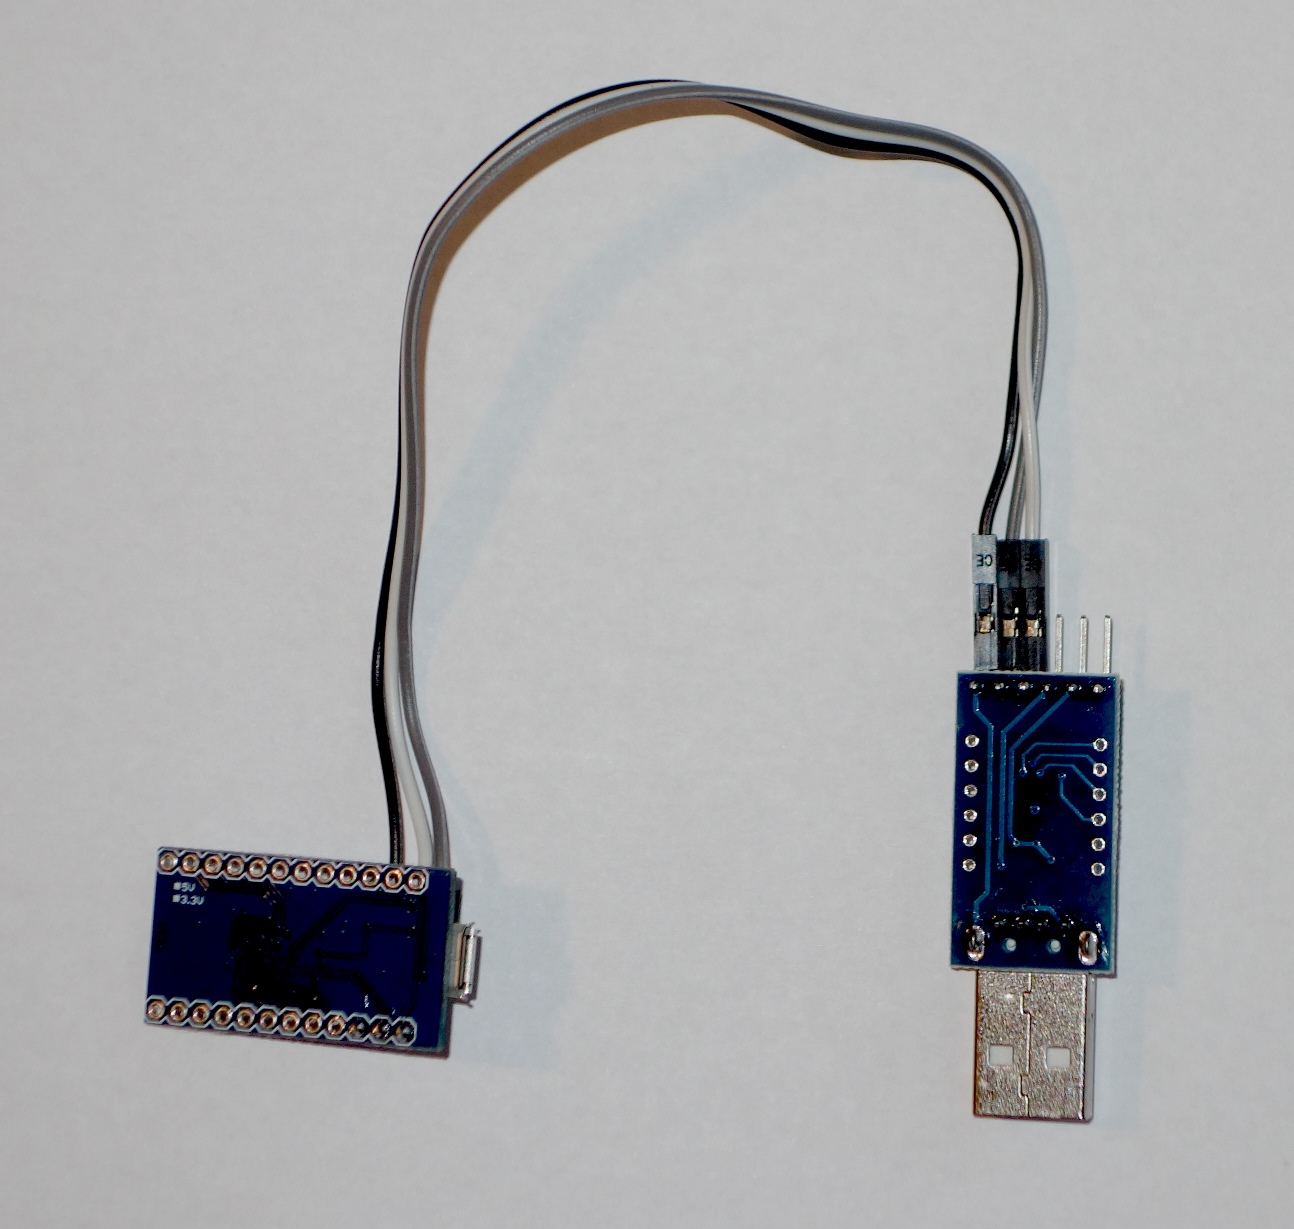 GIMX USB WHEEL ADAPTER- USE YOUR LOGITECH G27, G25 Bahrain